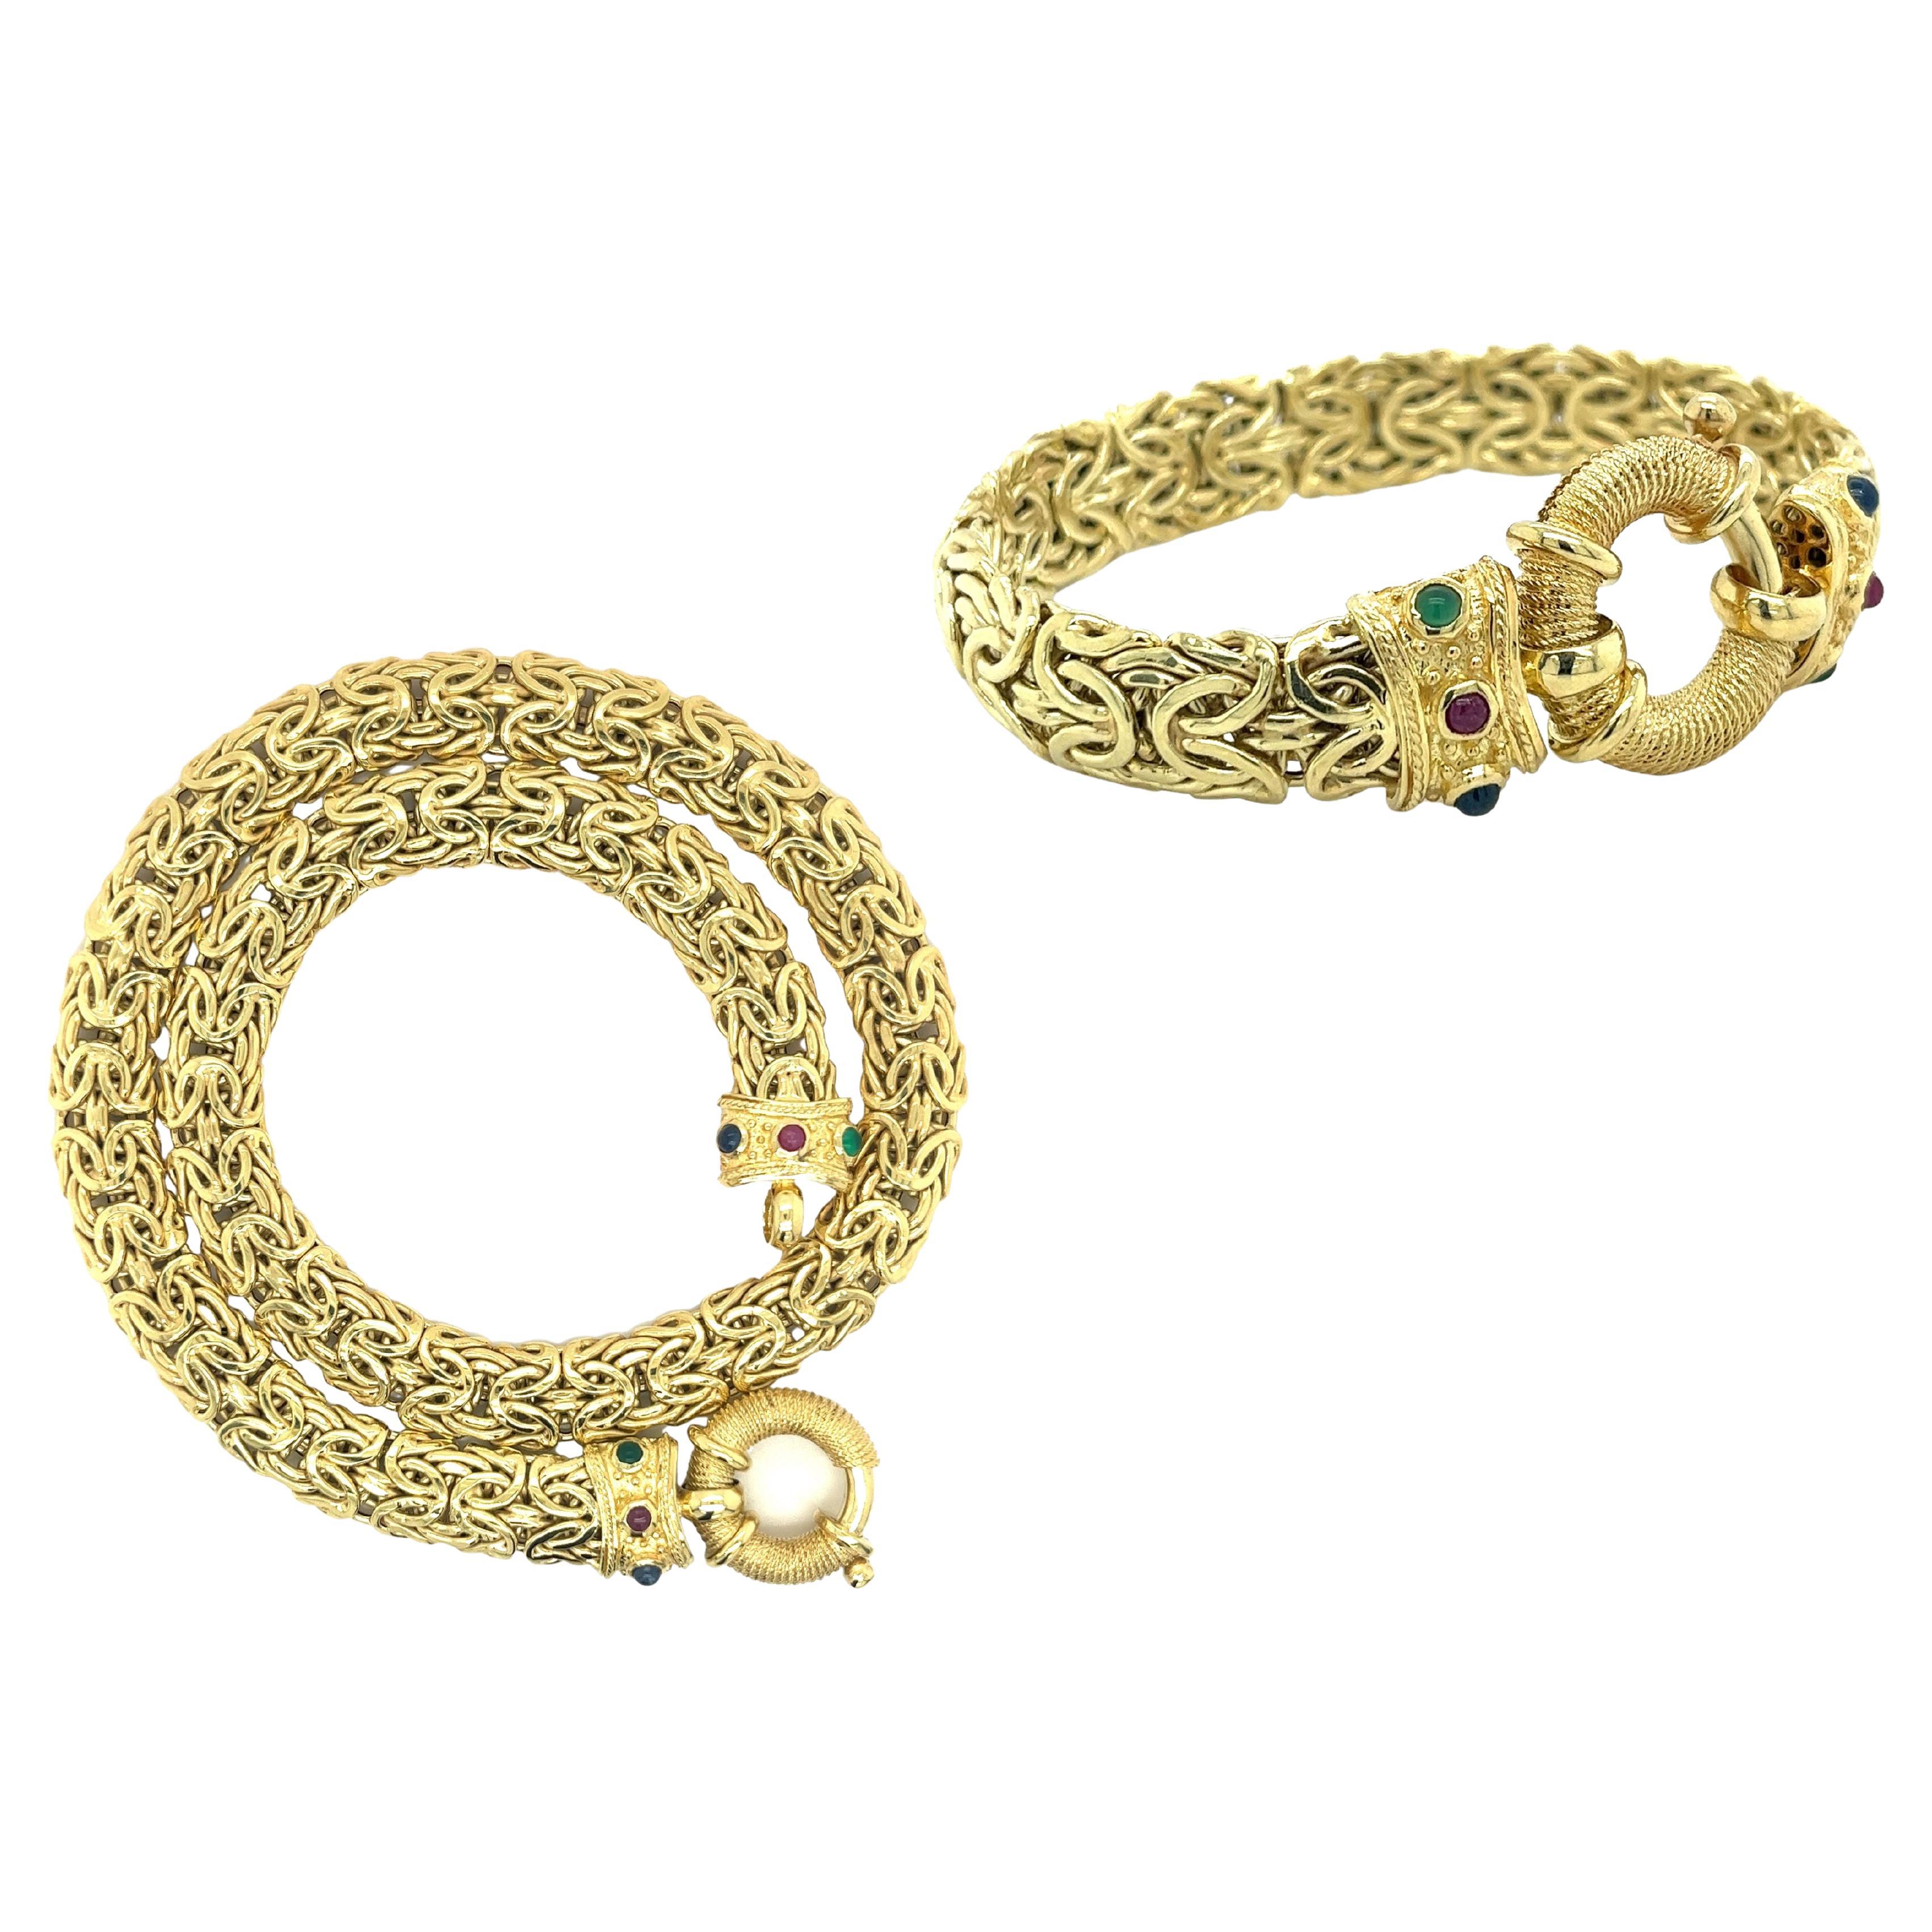 Bracelet et collier en chaîne byzantine en or jaune 14K